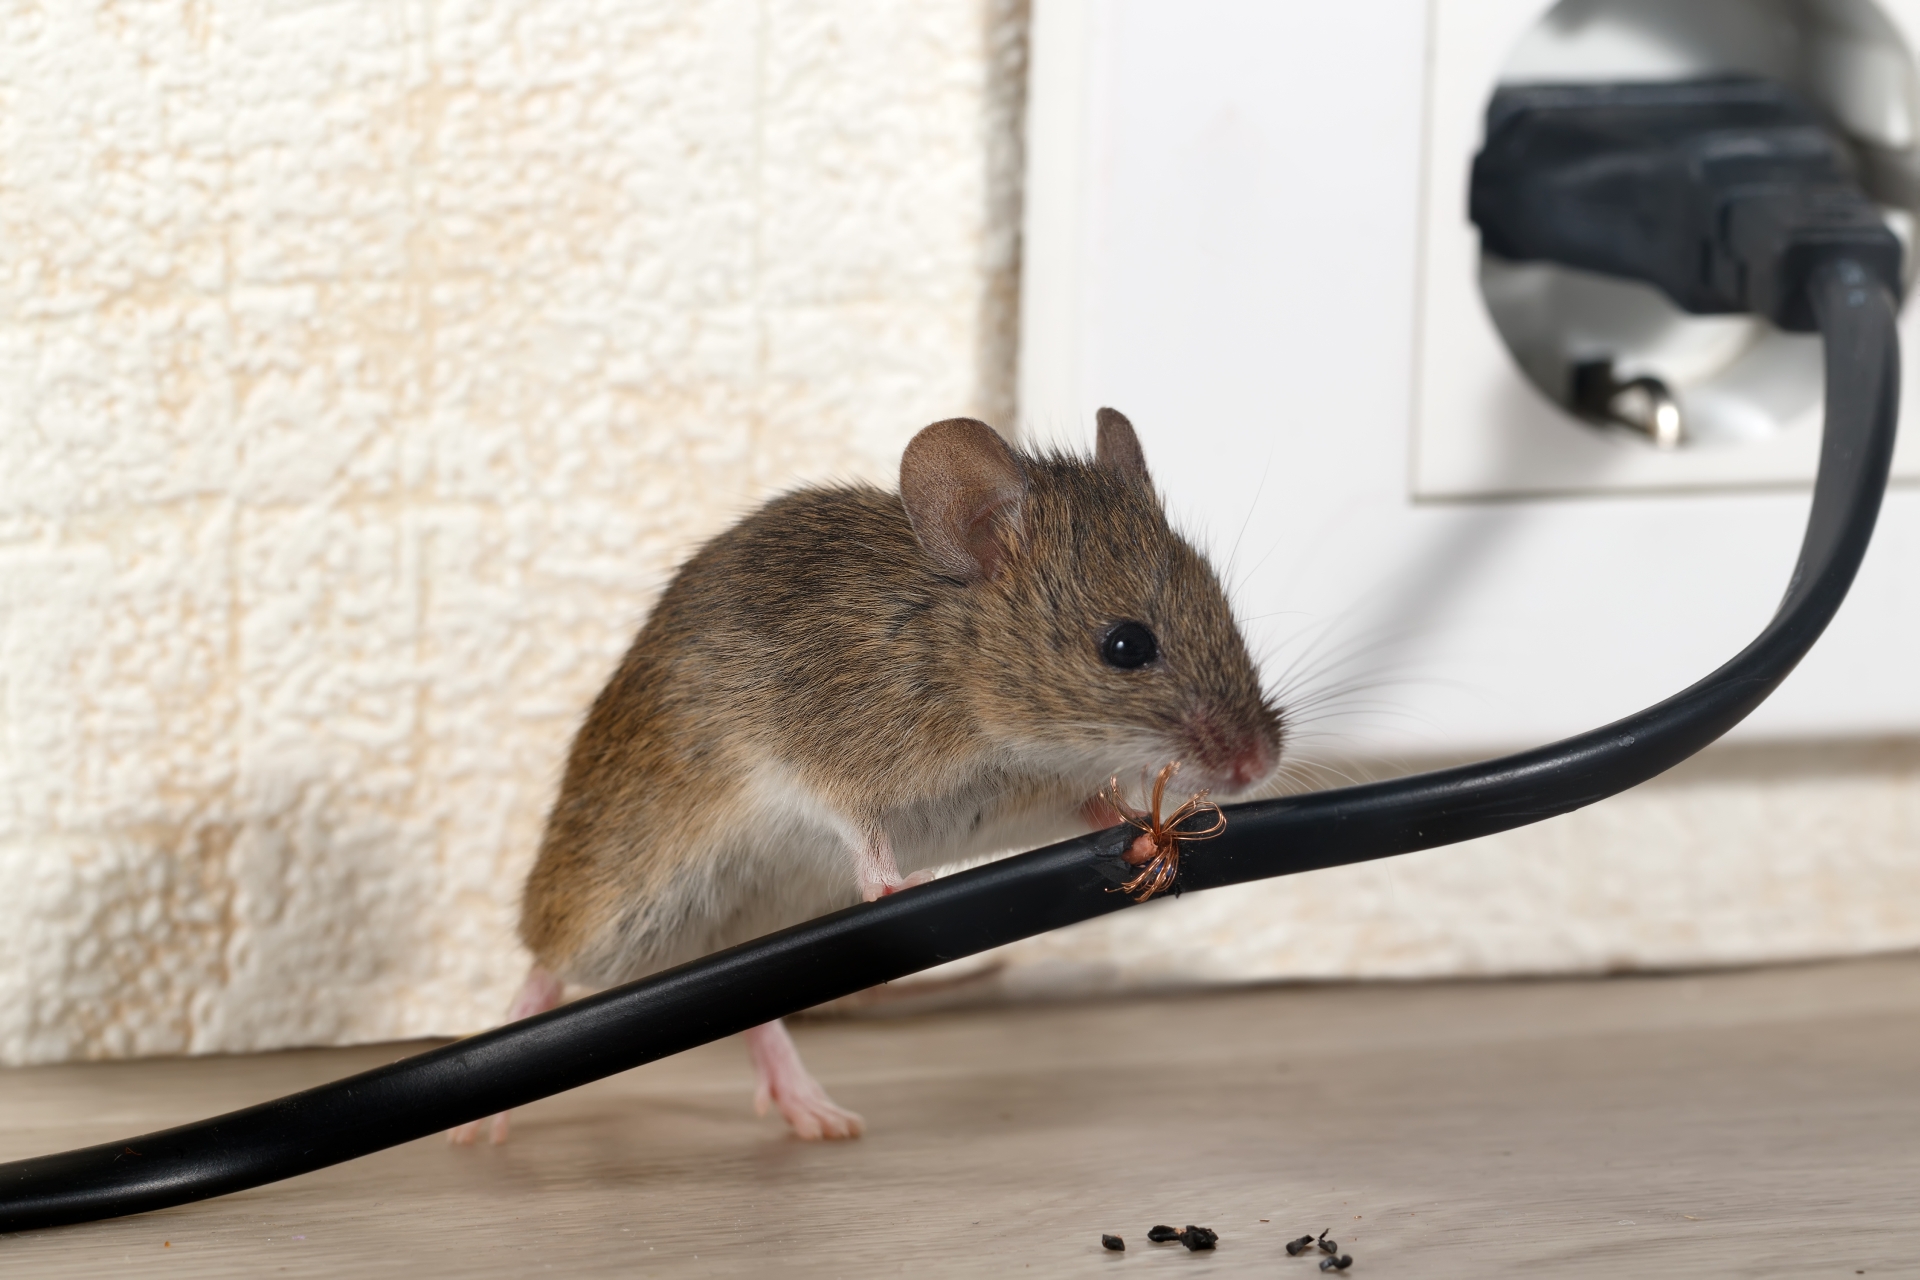 Mice Infestation, Pest Control in Barnes, Castelnau, SW13. Call Now 020 8166 9746